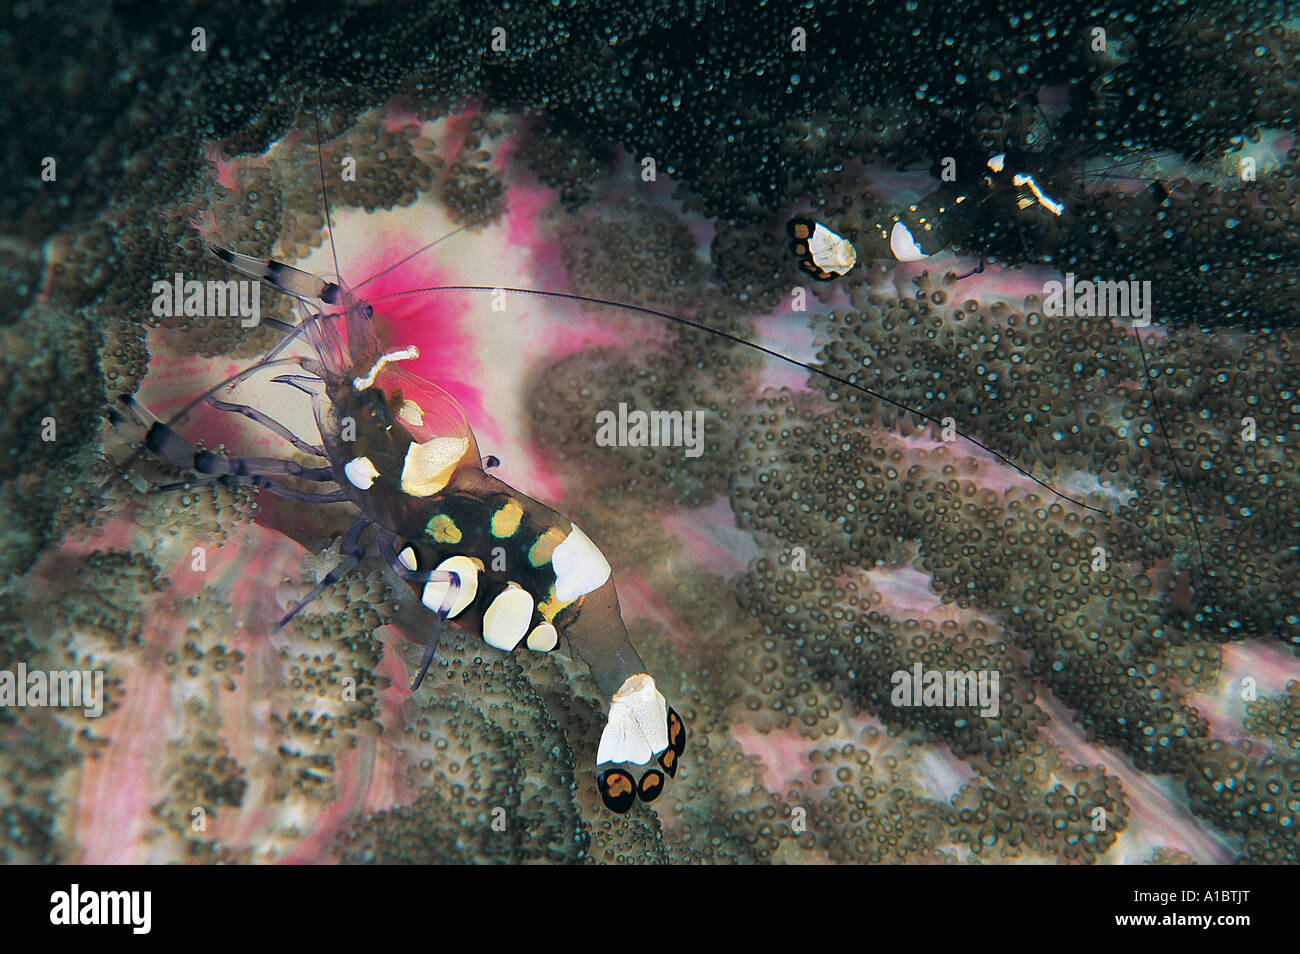 Anemone Garnelen Periclimenes Brevicarpalis auf eine selbstklebende Seeanemone Sulawesi Indonesien Stockfoto